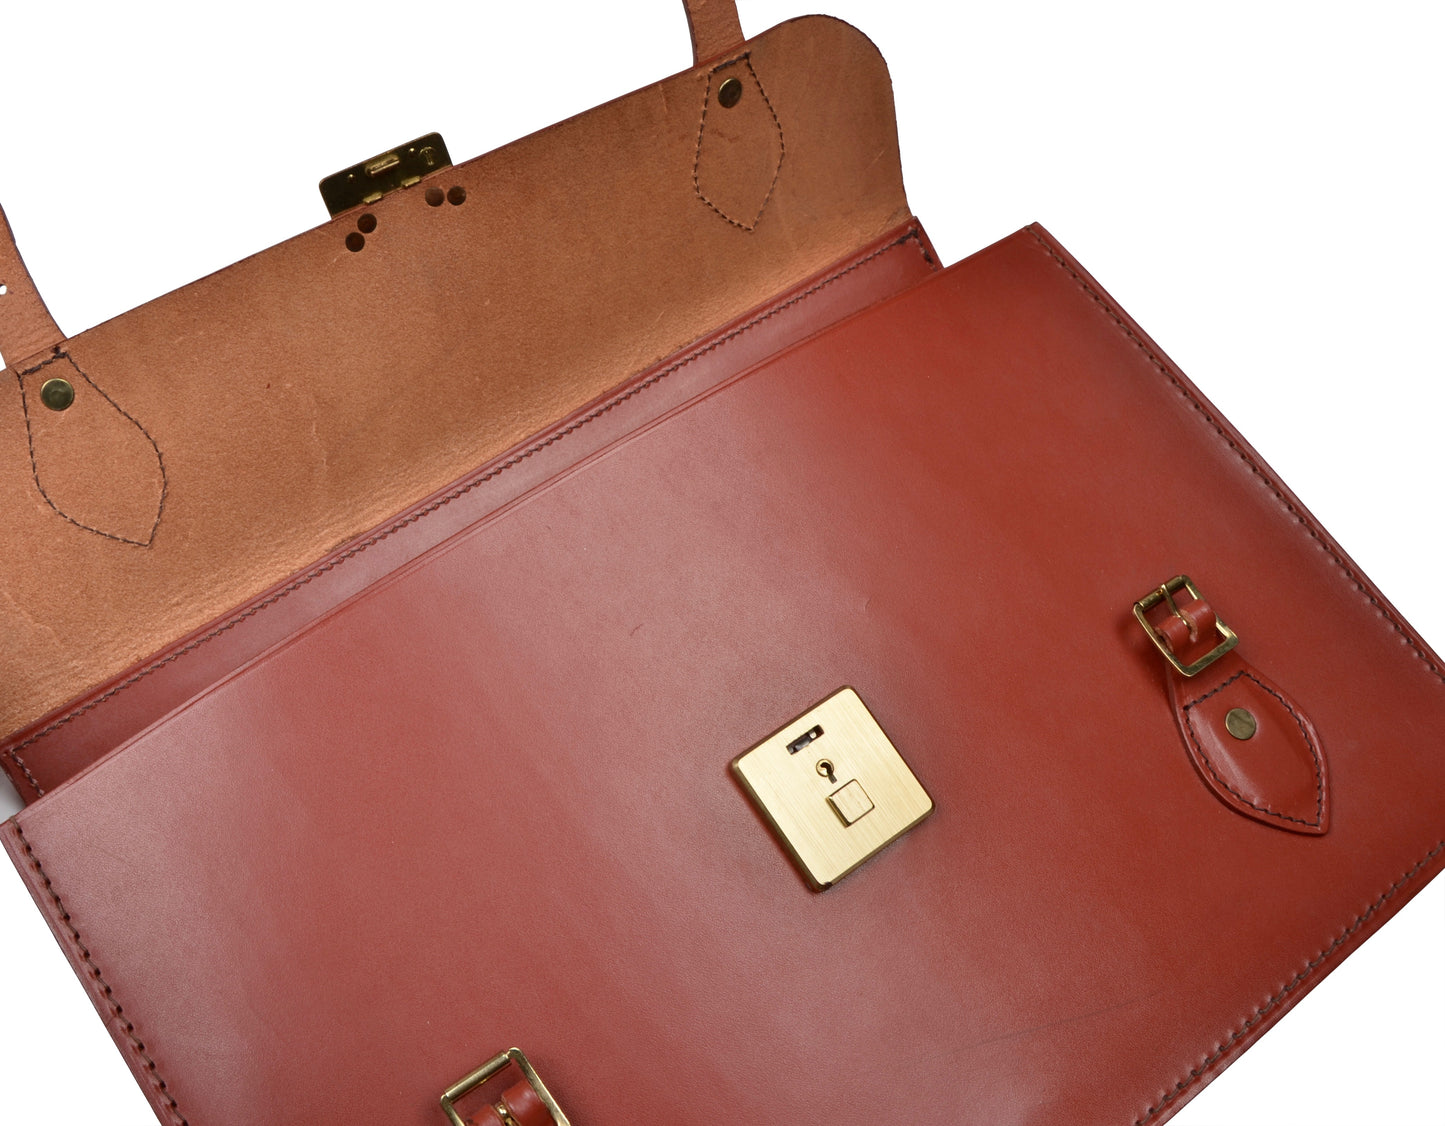 John Sharp Leather Briefcase - Rust